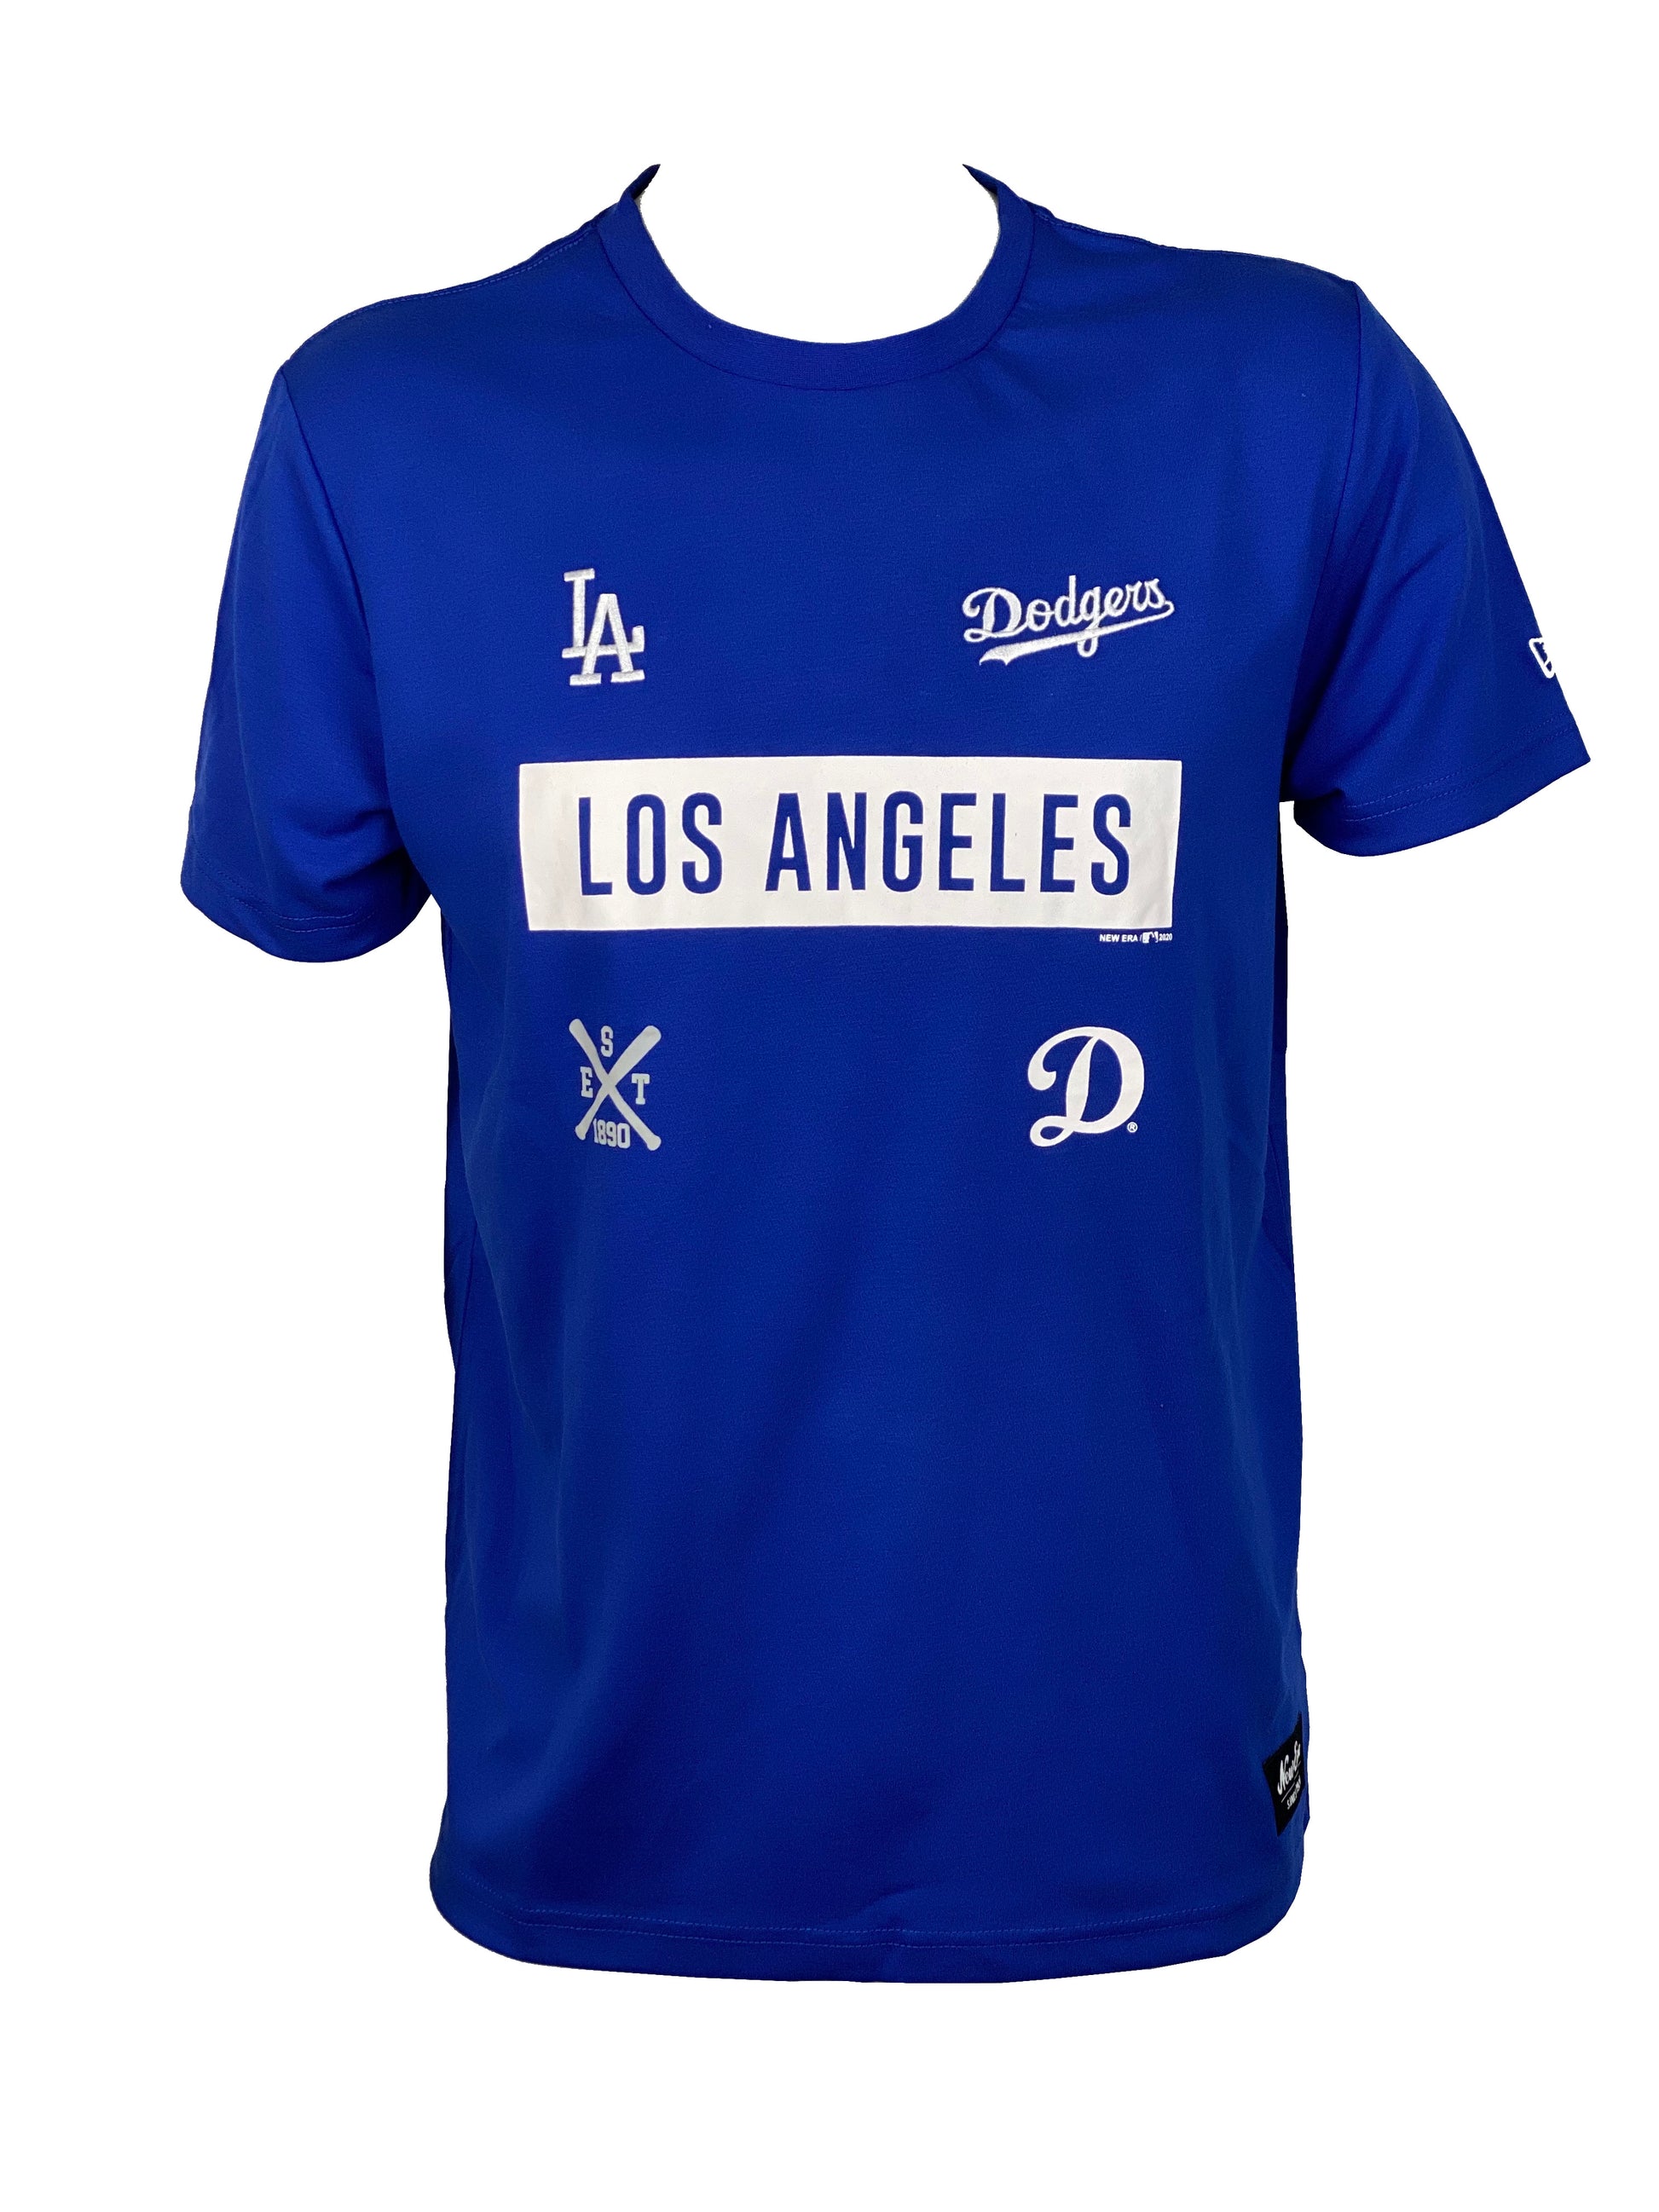 Los Angeles Dodgers Jersey Logo  Dodgers, Dodgers jerseys, Los angeles  dodgers